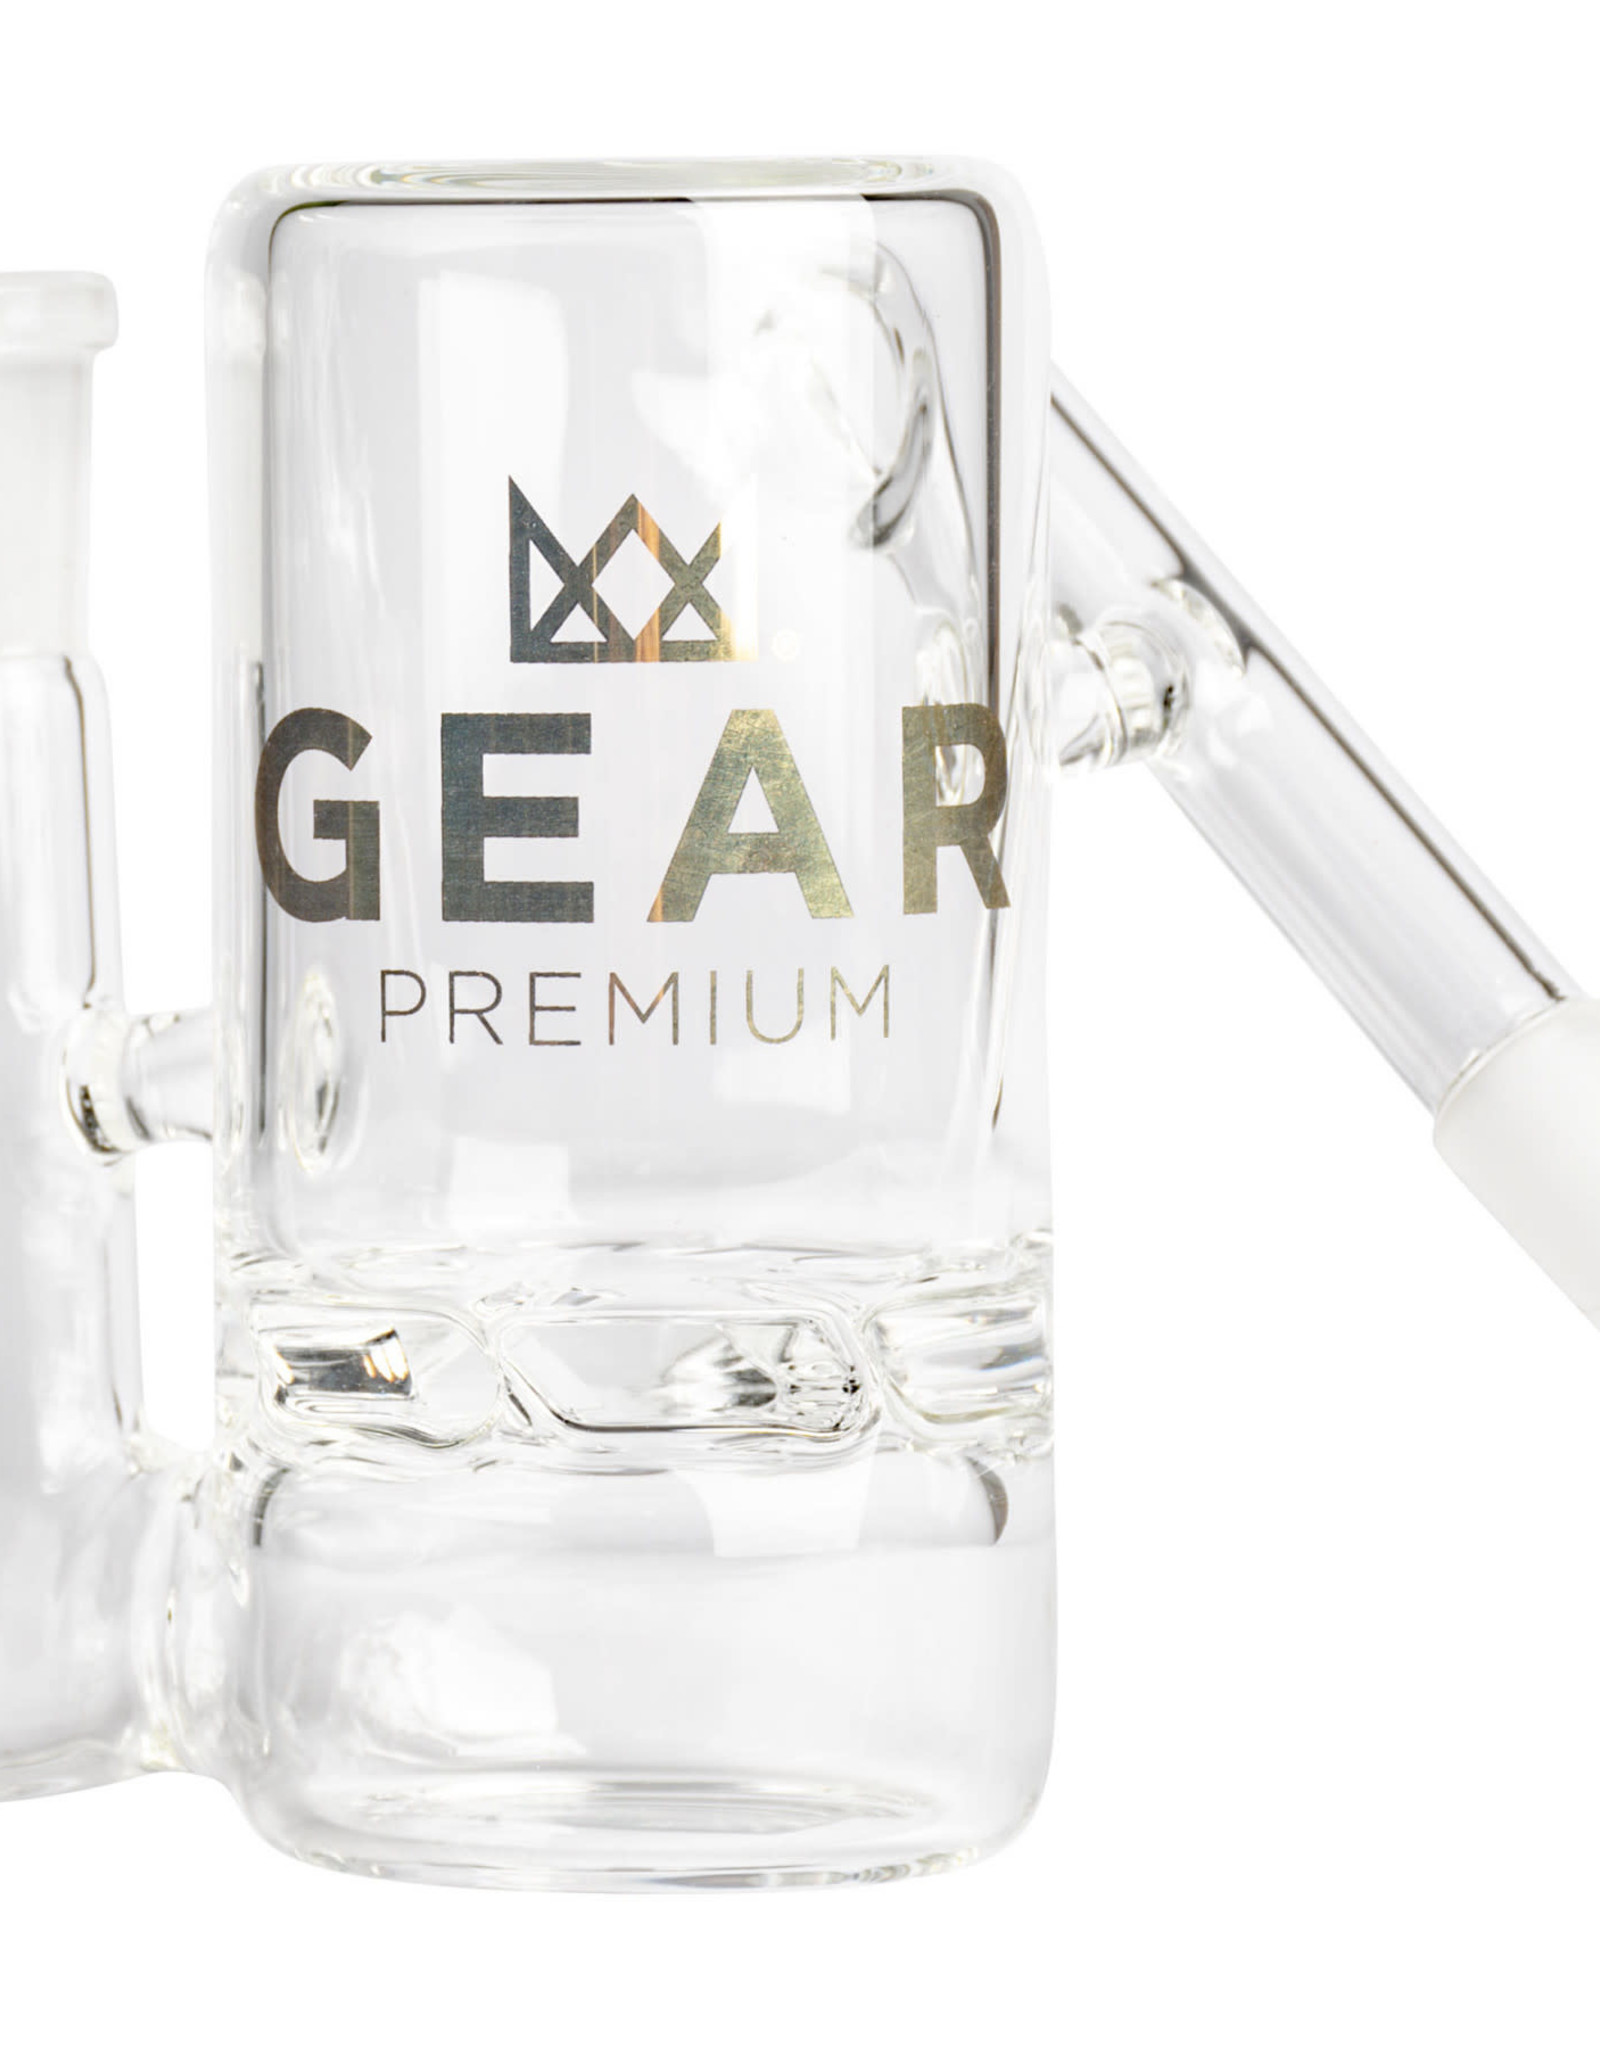 GEAR Premium G1108 45 DEGREE TURBINE PERCASH CATCHER W/ 14mm JOINT